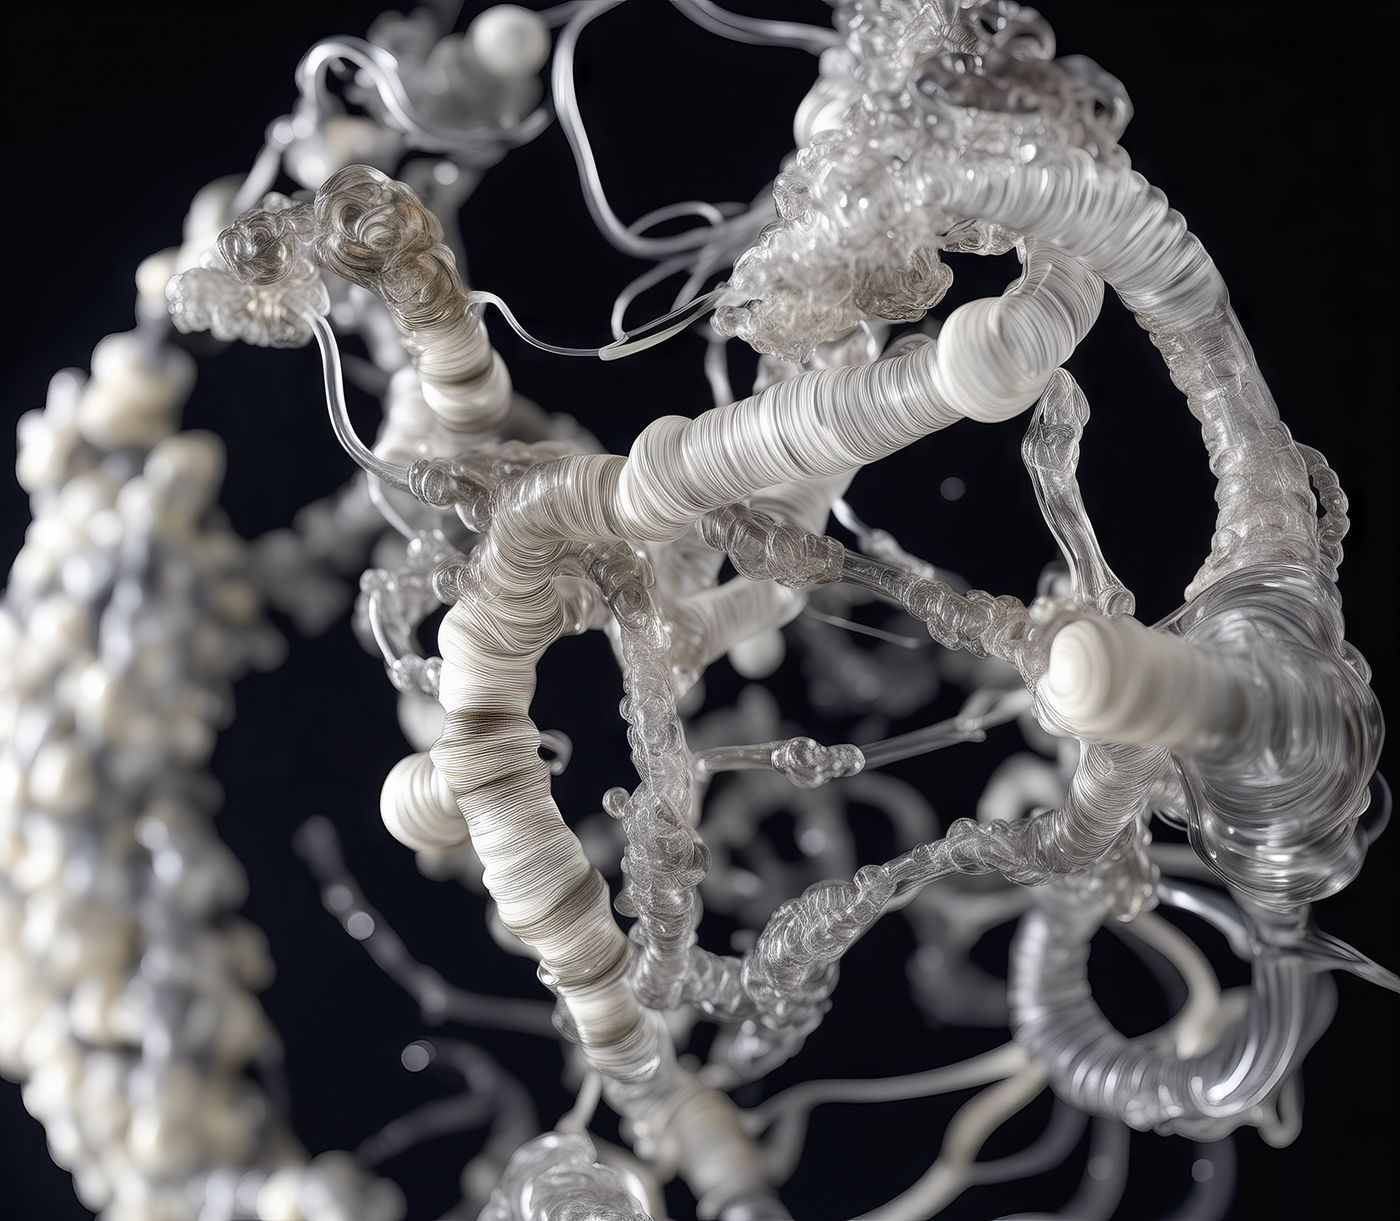 Digital Art  contemporary art science biology 3D Nature art synthetic Life Technology ai